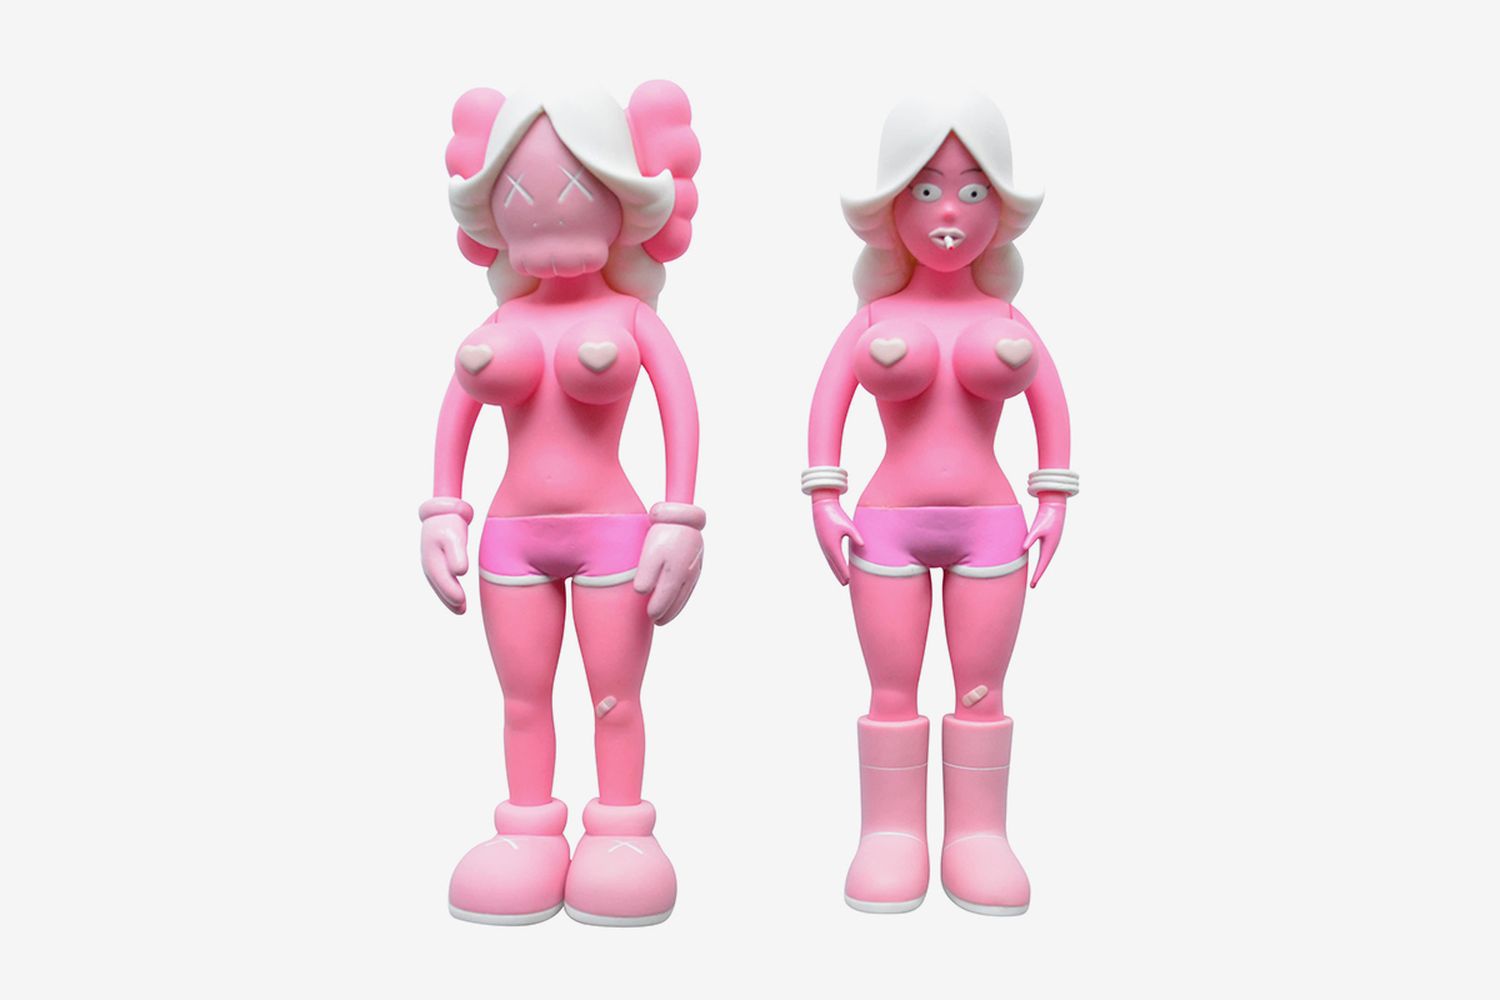 Twins (Pink), 2006